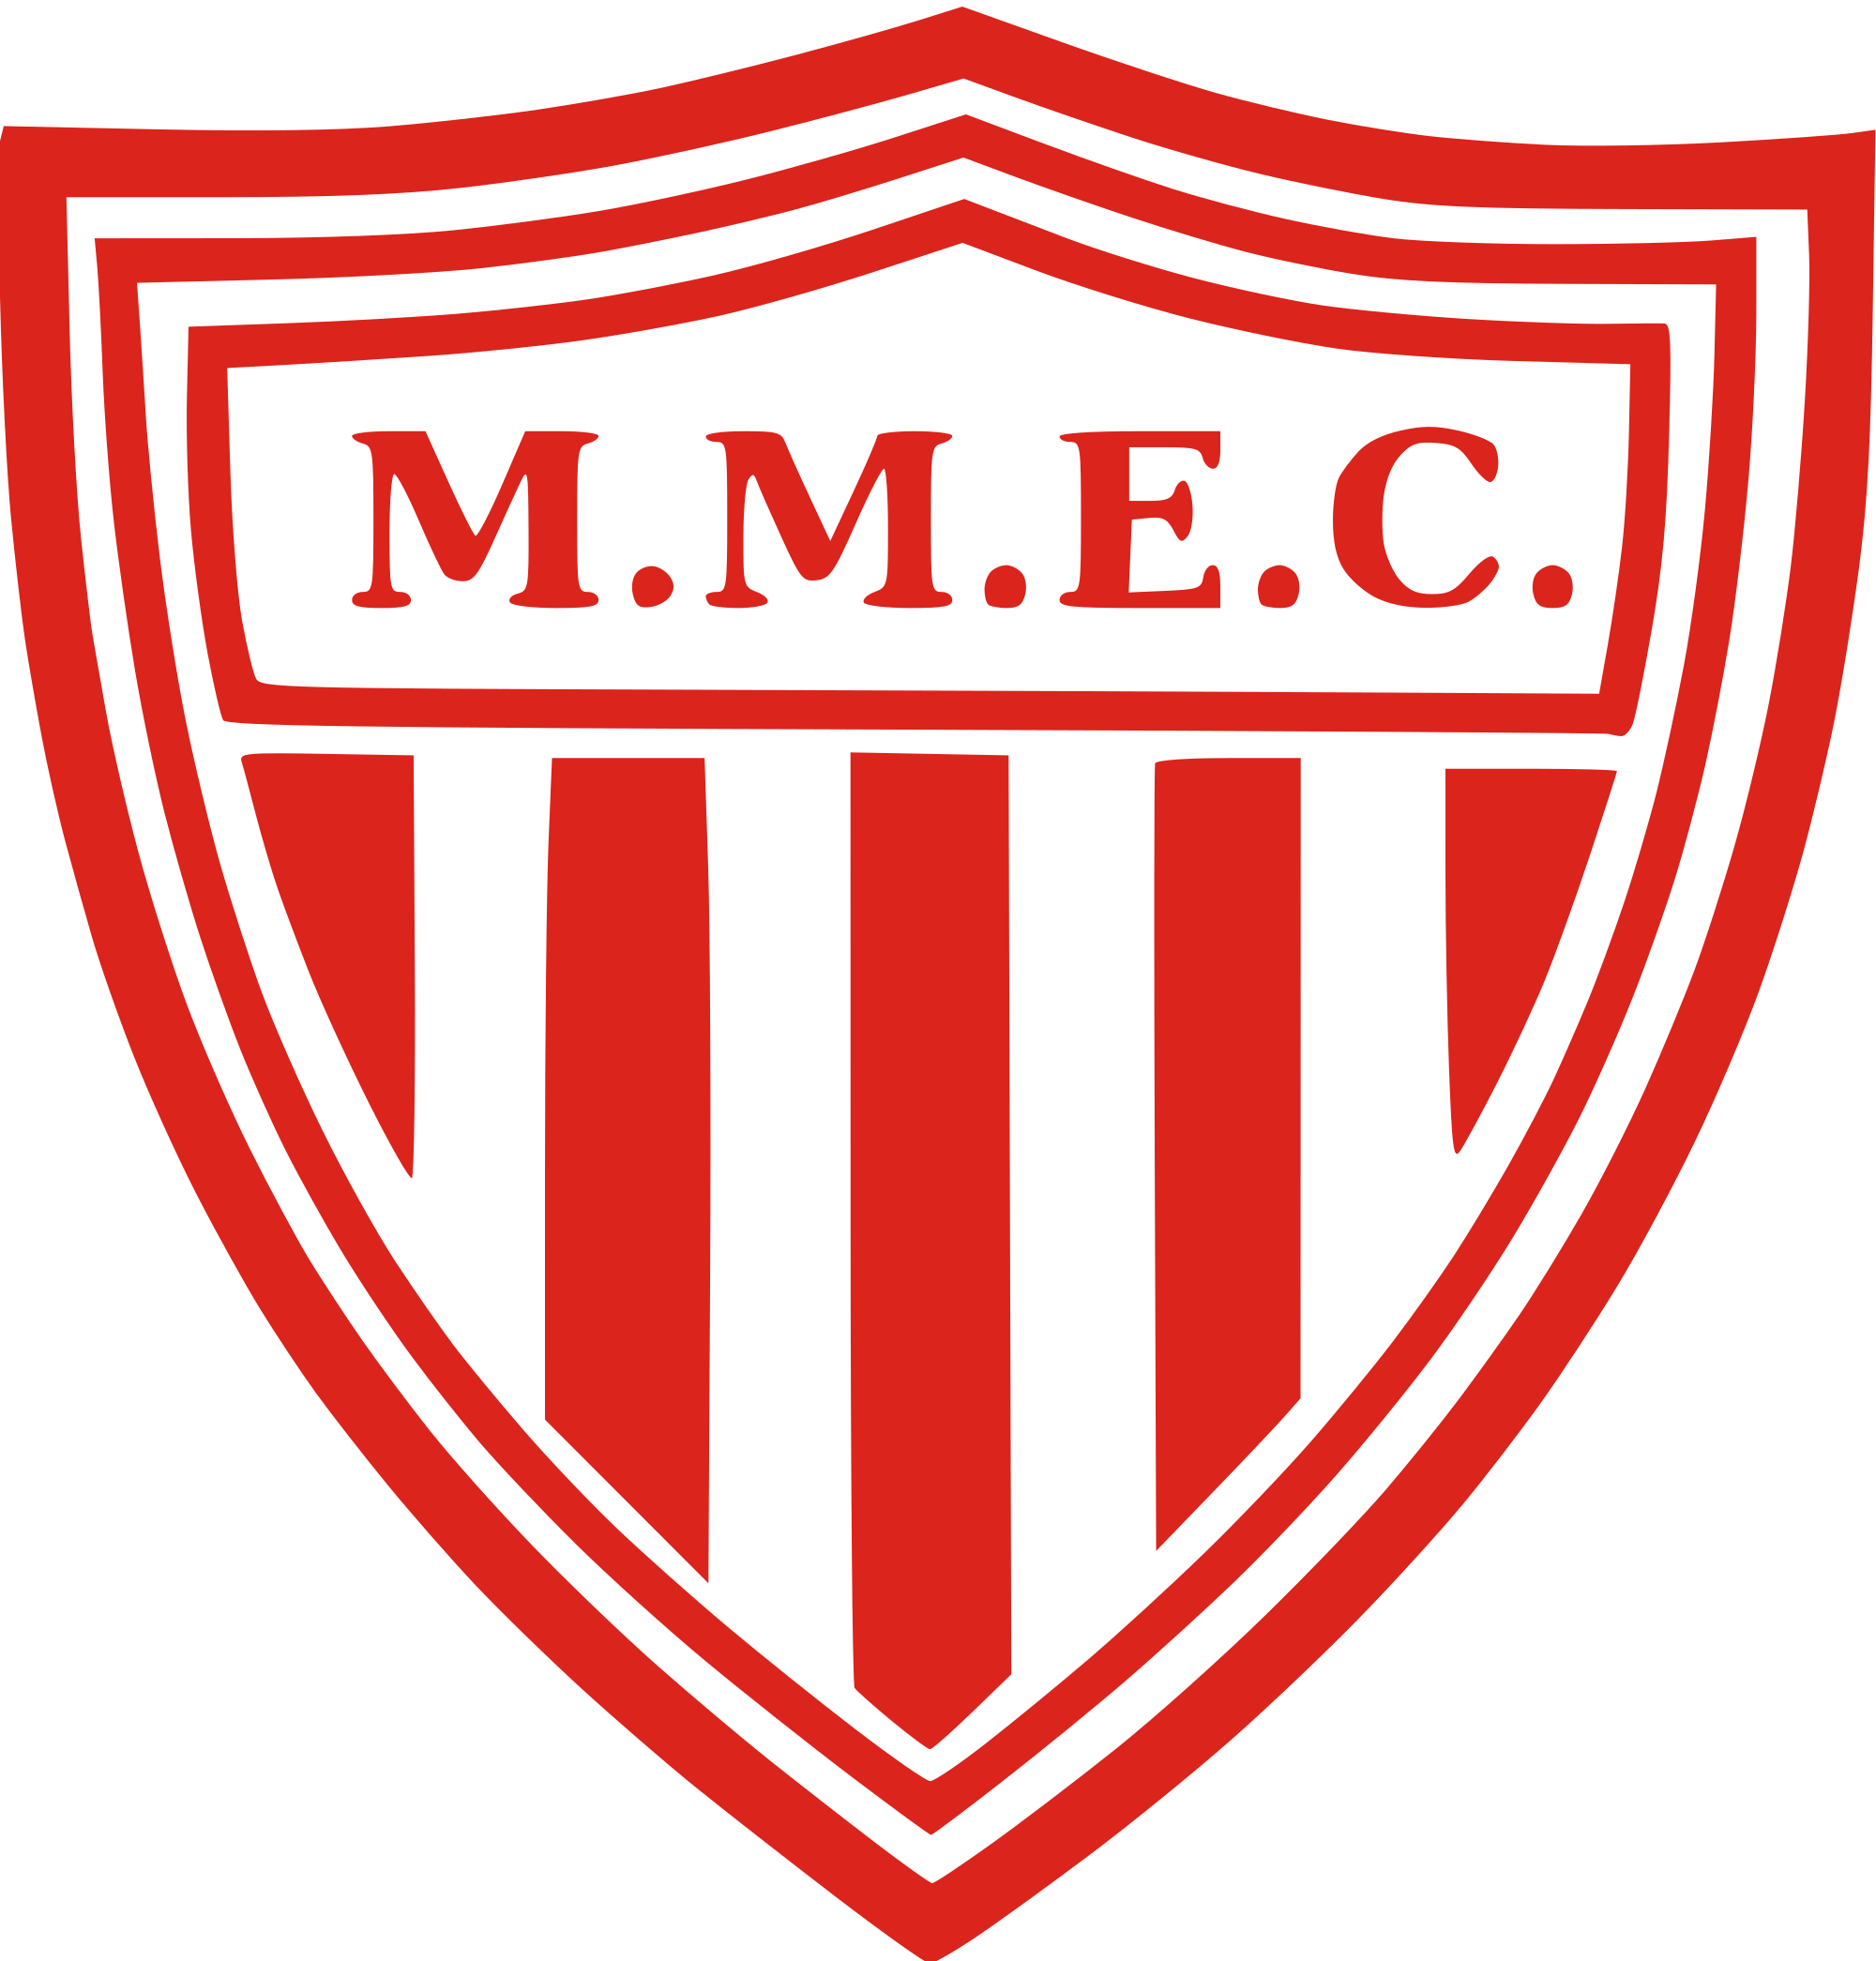 Mogi Mirim team logo